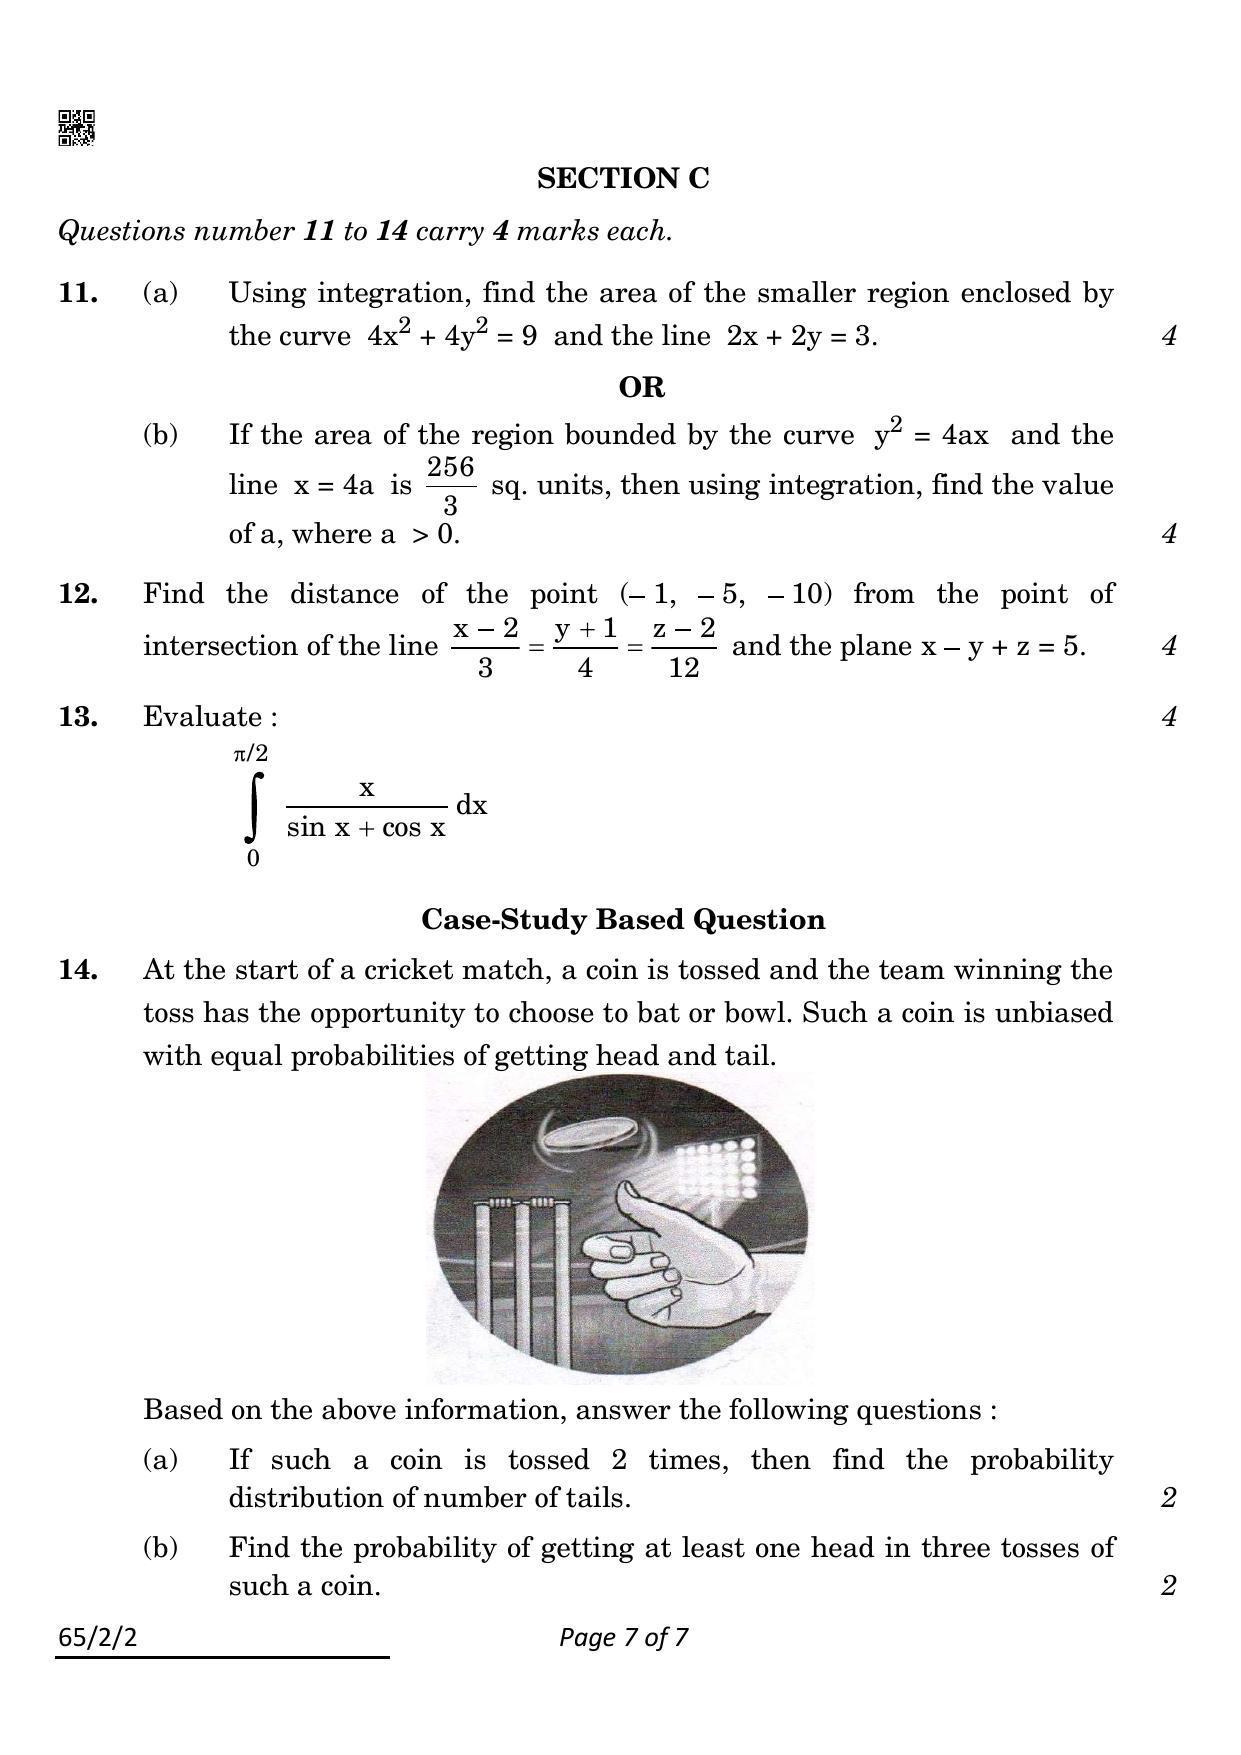 CBSE Class 12 65-2-2 Mathematics 2022 Question Paper - Page 7